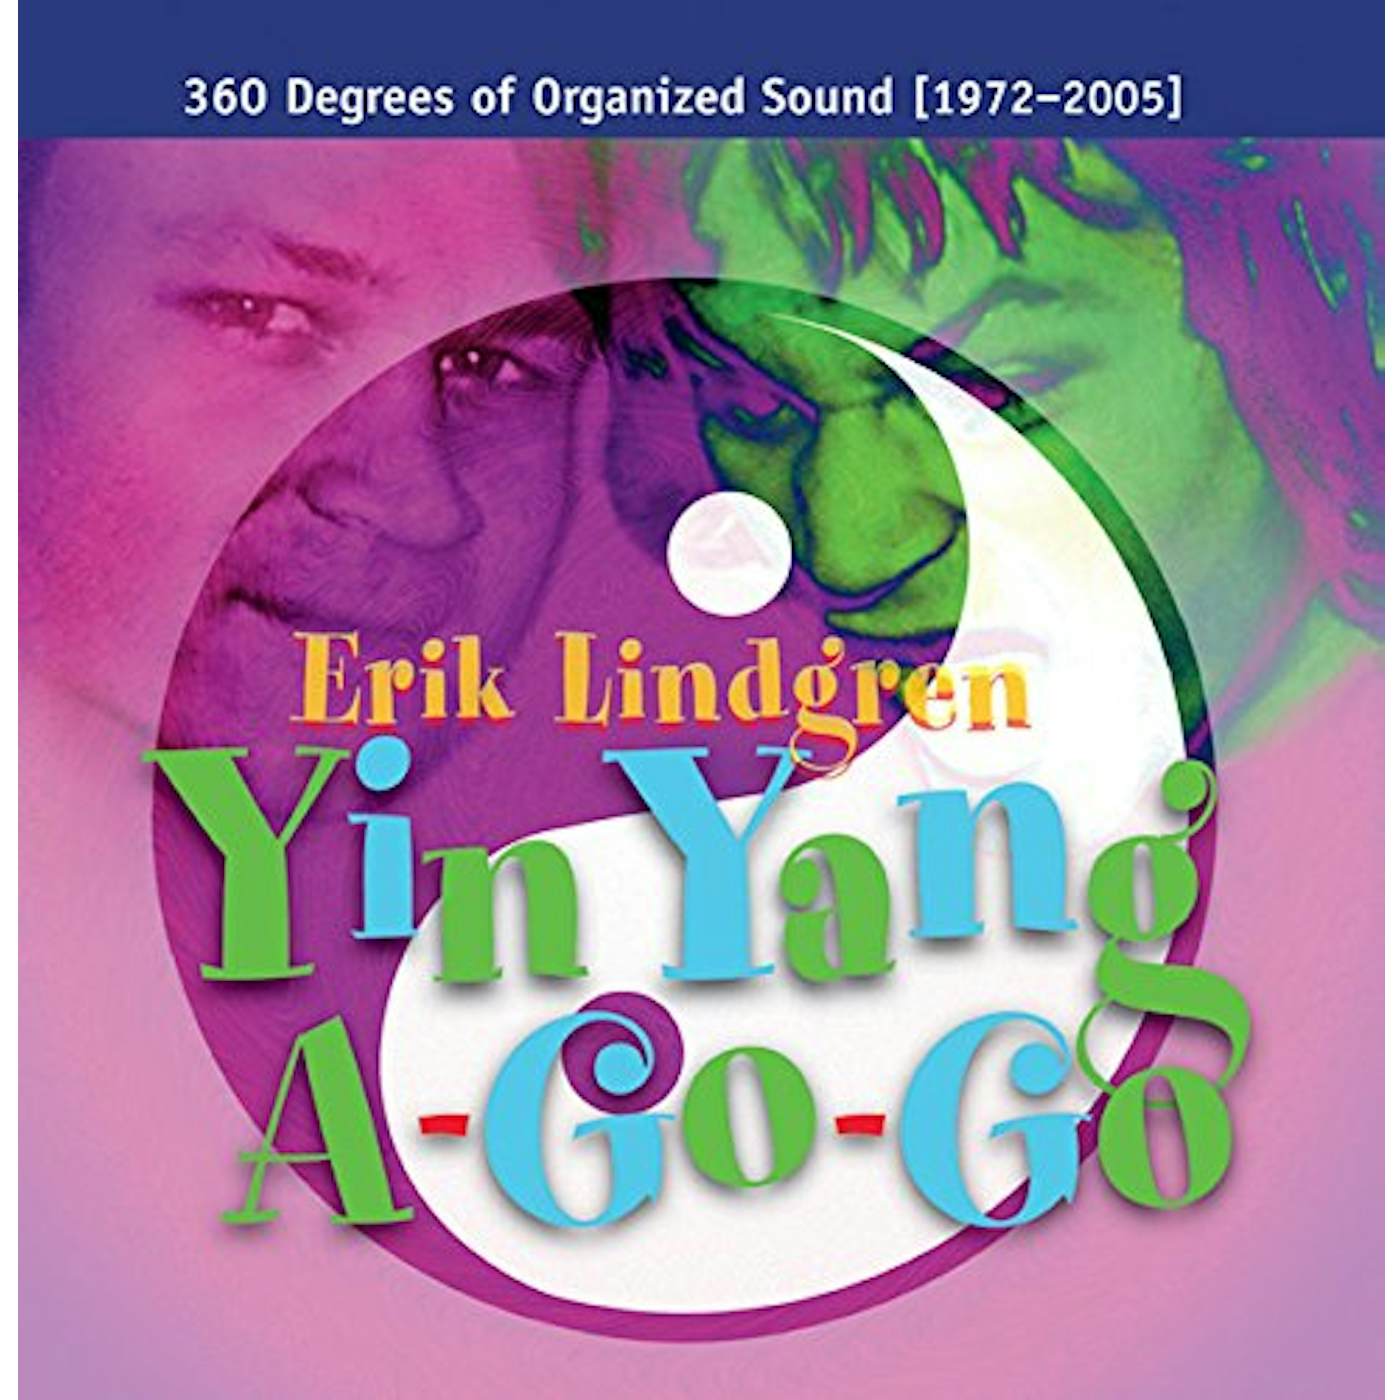 Erik Lindgren YIN YANG A-GO-GO / 360 DEGREES OF ORGANIZED SOUND CD